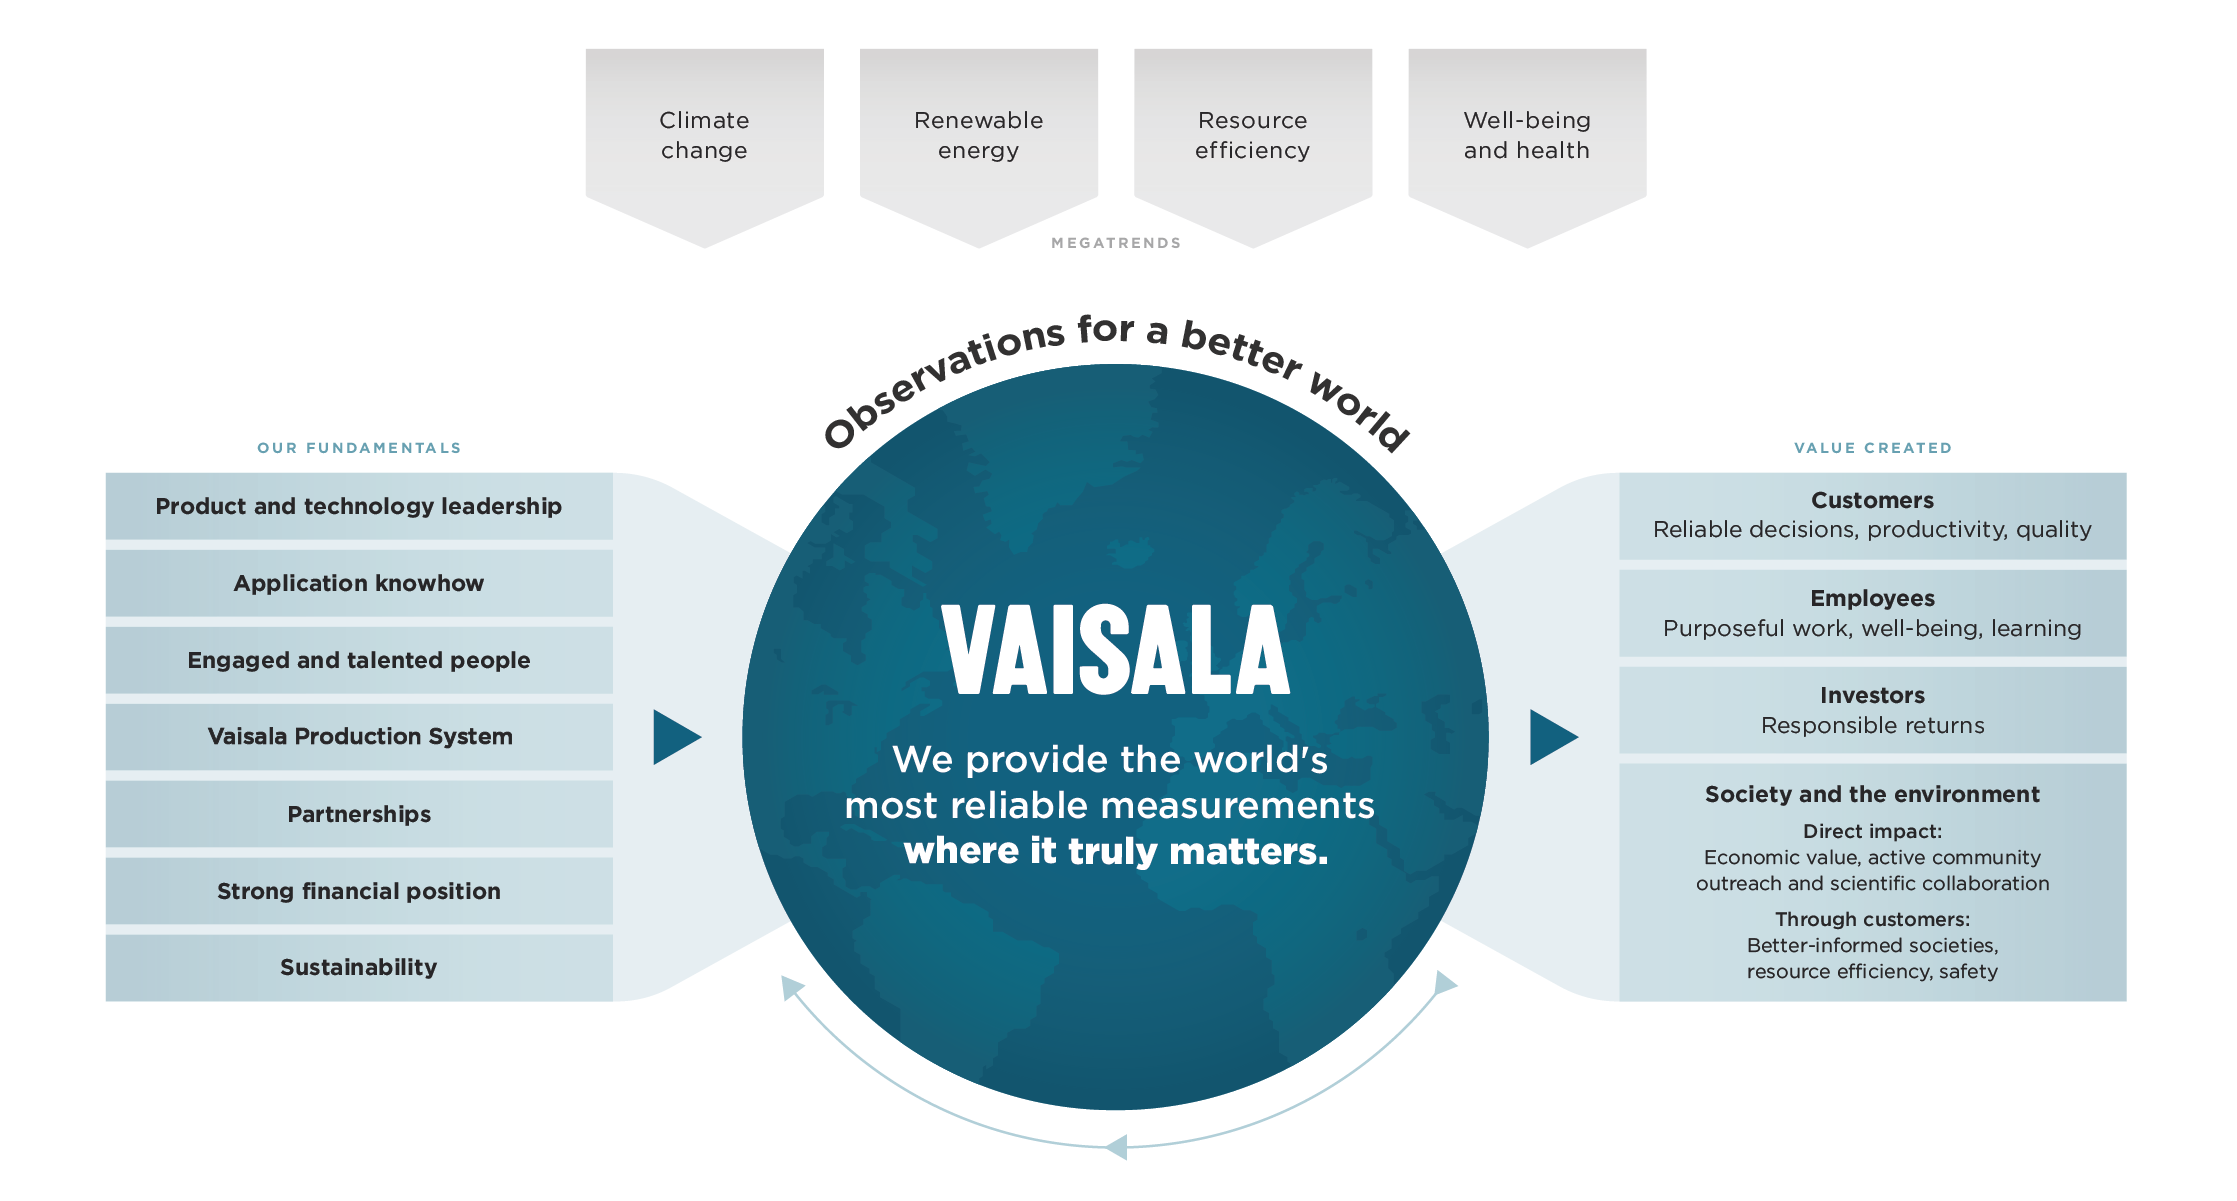 Vaisala's value creation model